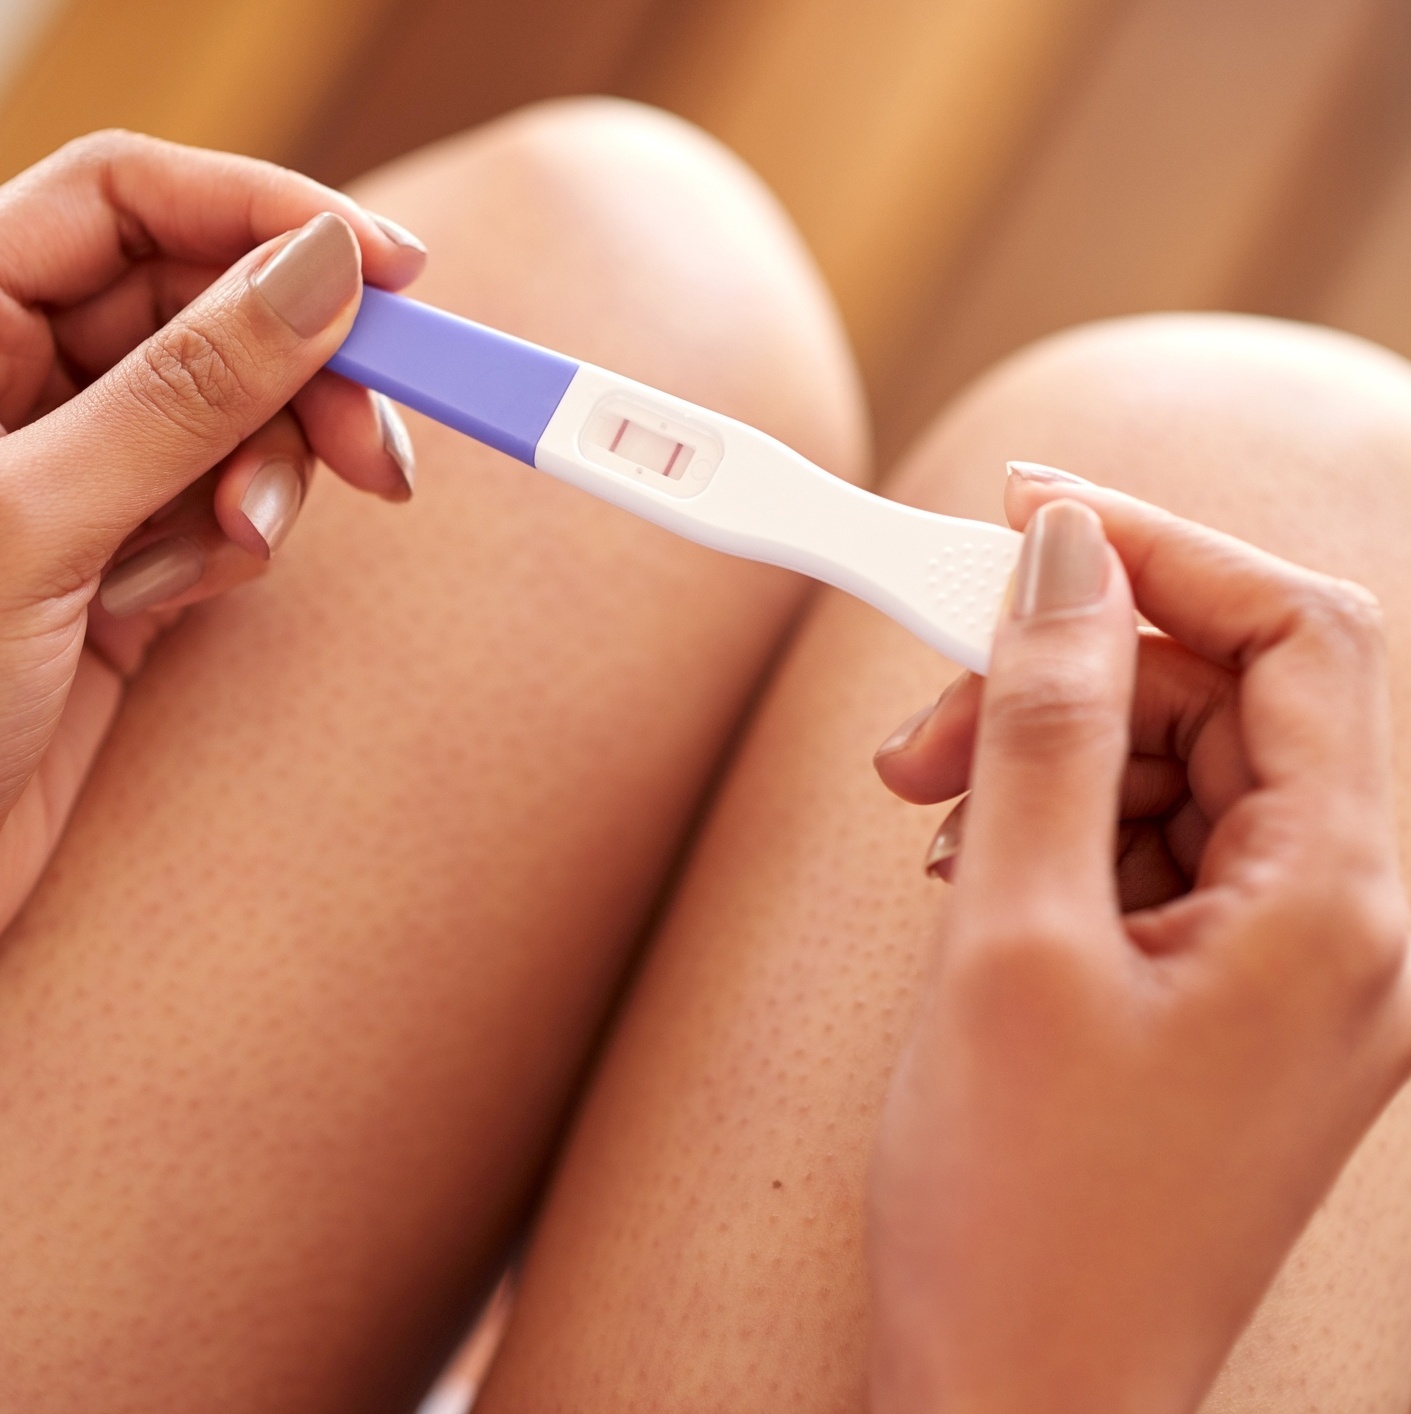 Primeiros sintomas de Gravidez - Como saber se estou grávida?